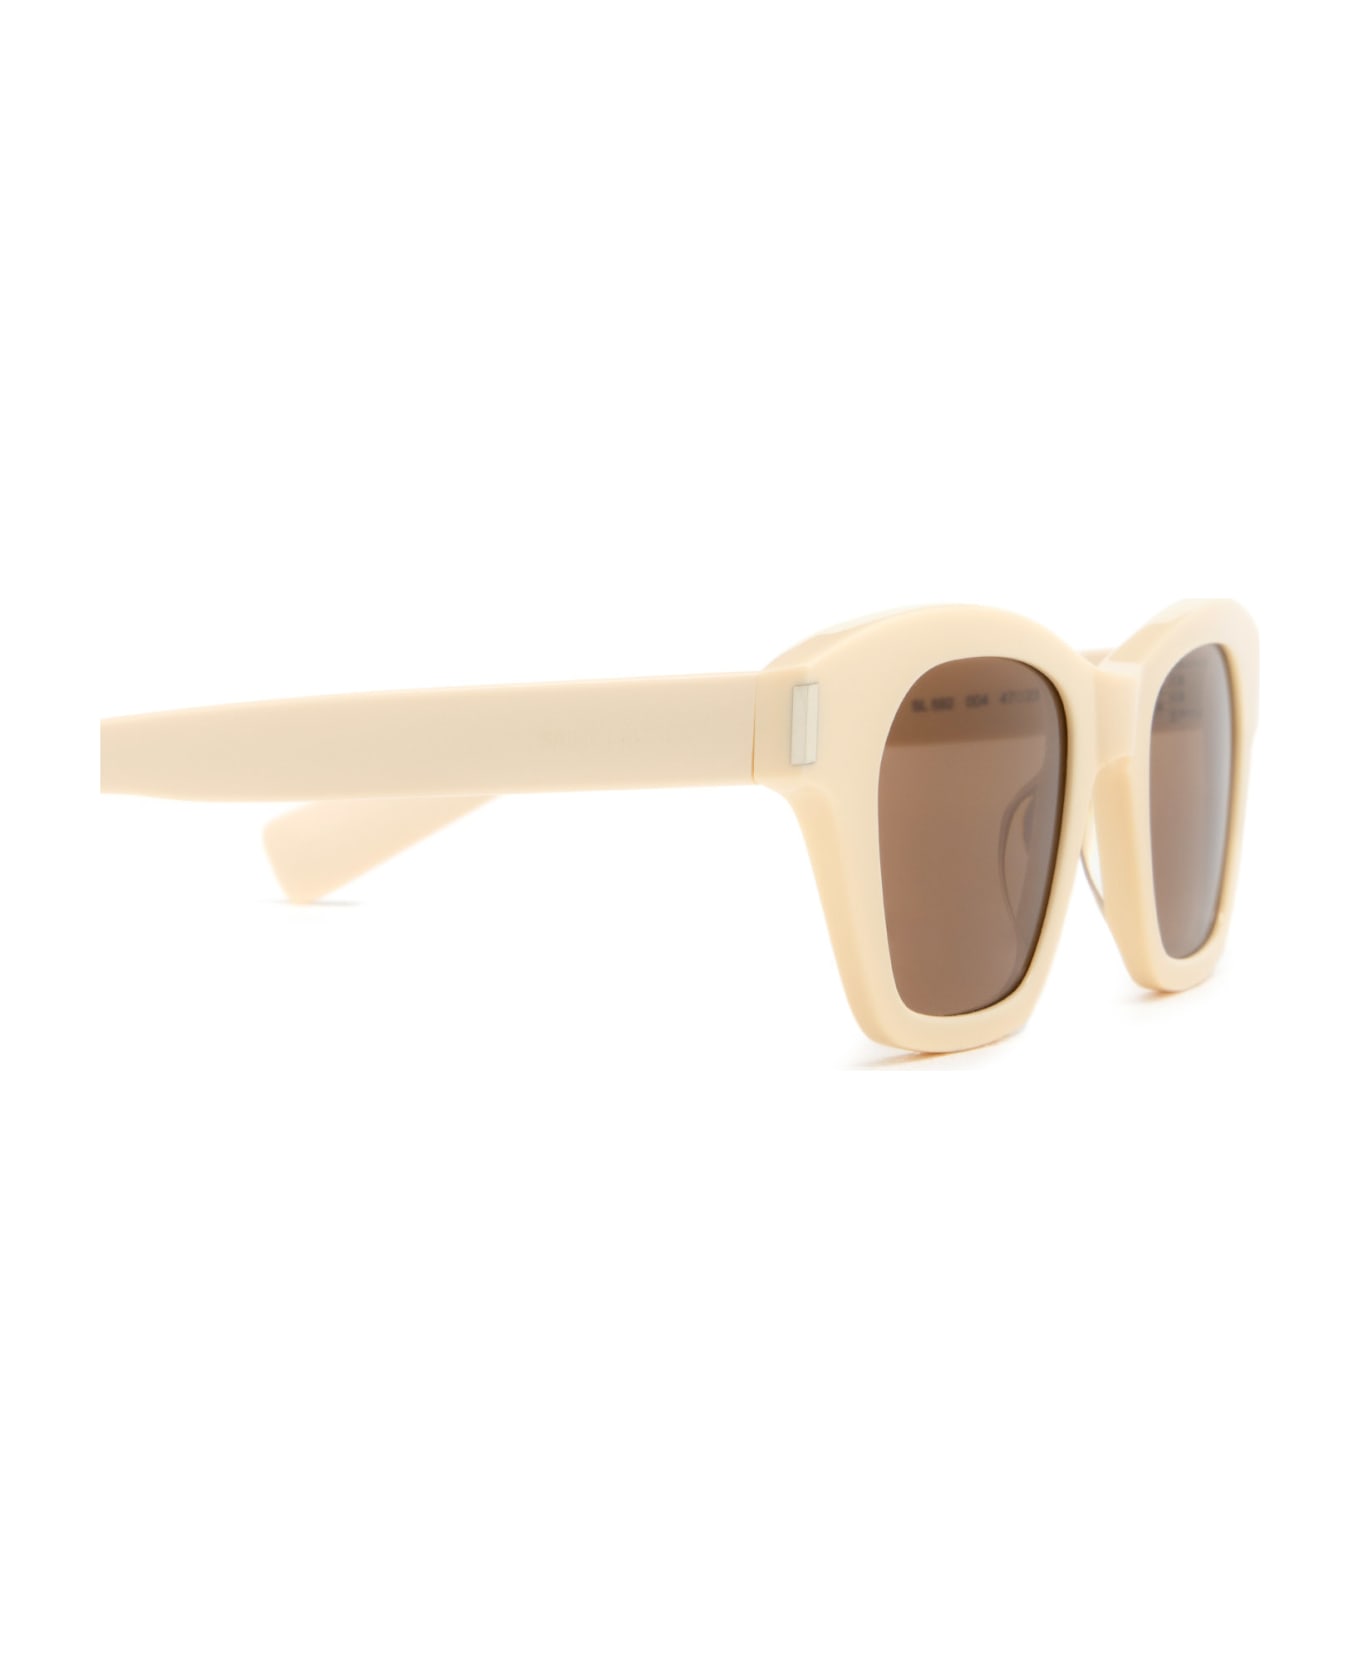 Saint Laurent Eyewear Sl 592 Ivory Sunglasses - Ivory